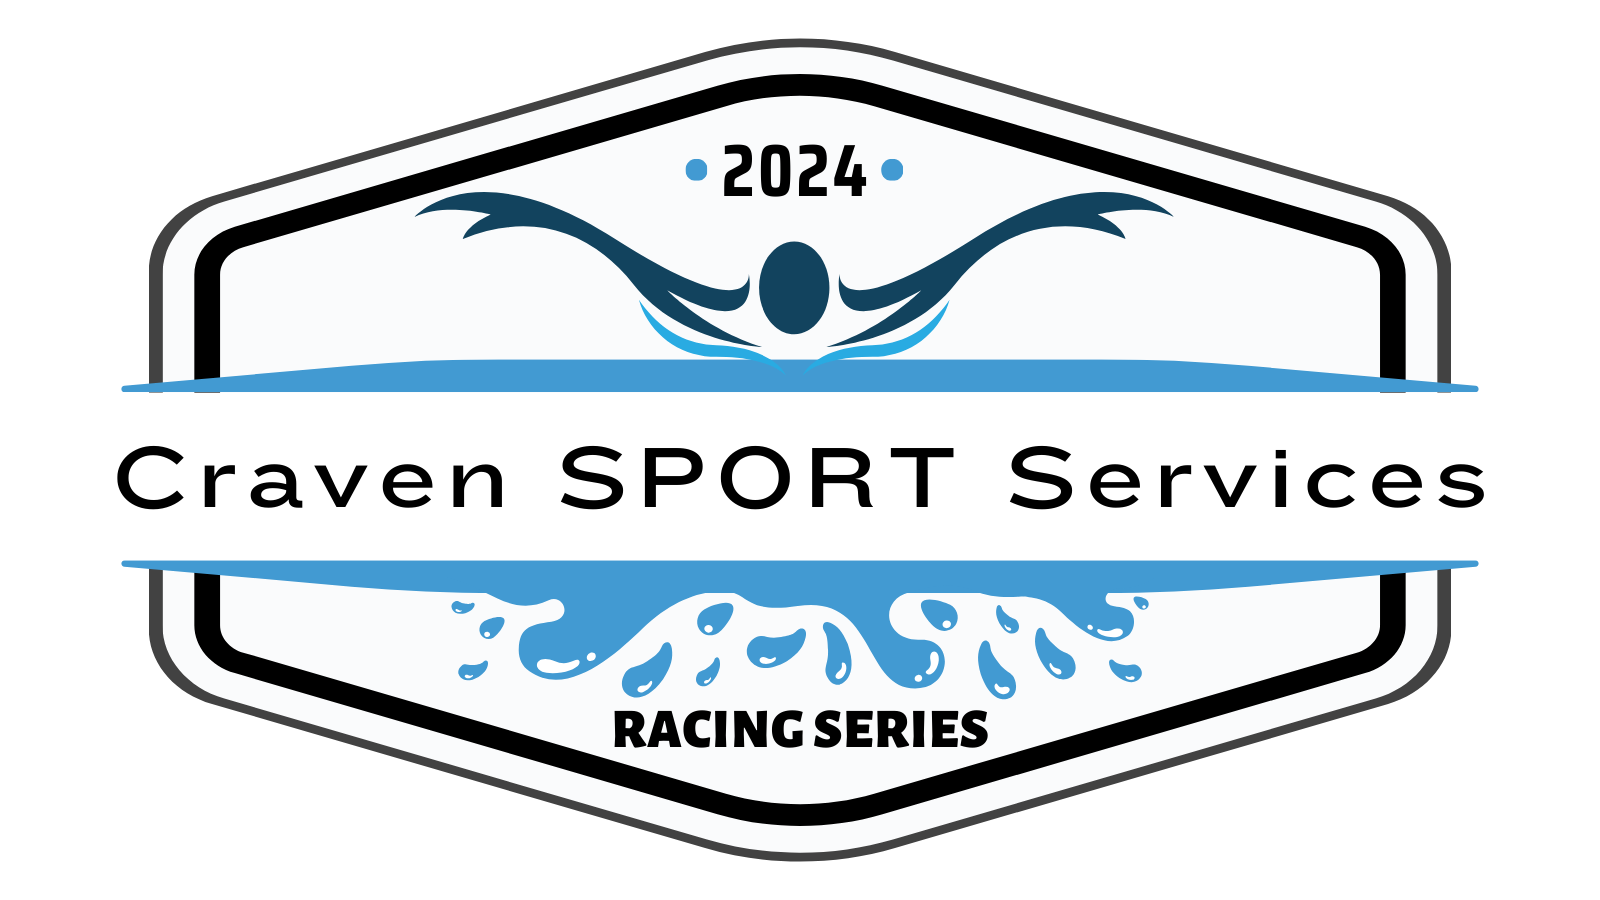 Craven SPORT Services Racing Series 4 image